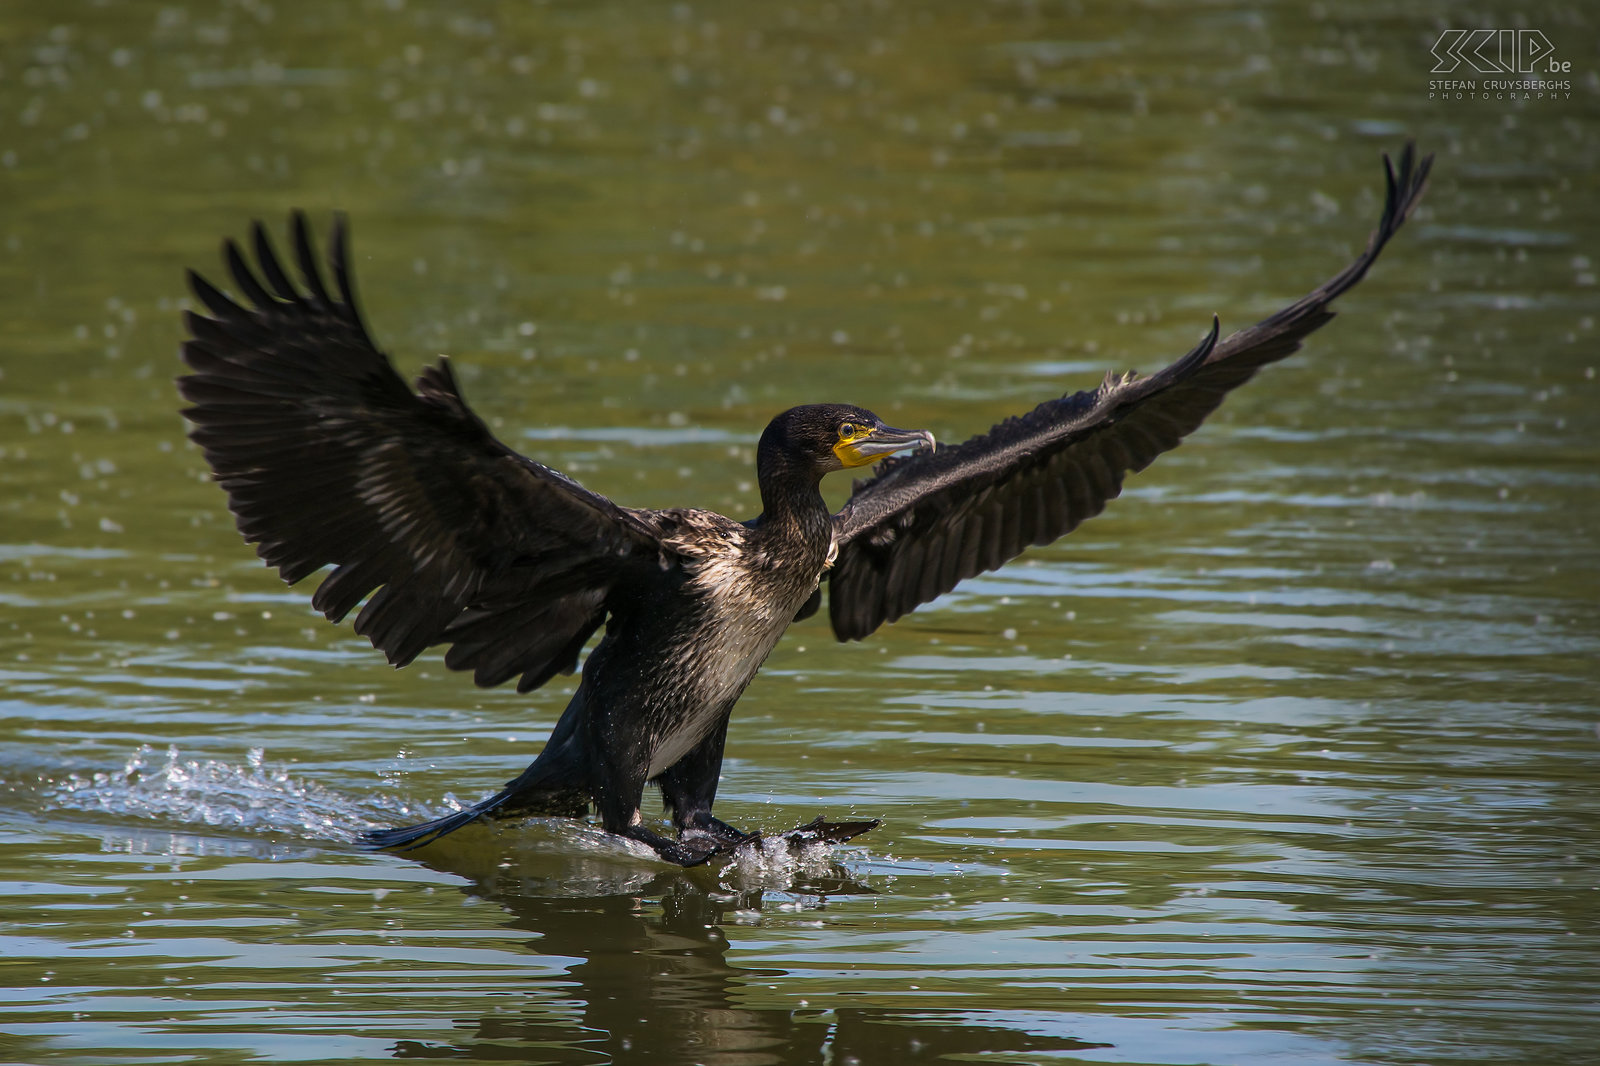 Birds - Cormorant Landing cormorant (Phalacrocorax carbo) at the Lepelaarsplassen in the Netherlands. Stefan Cruysberghs